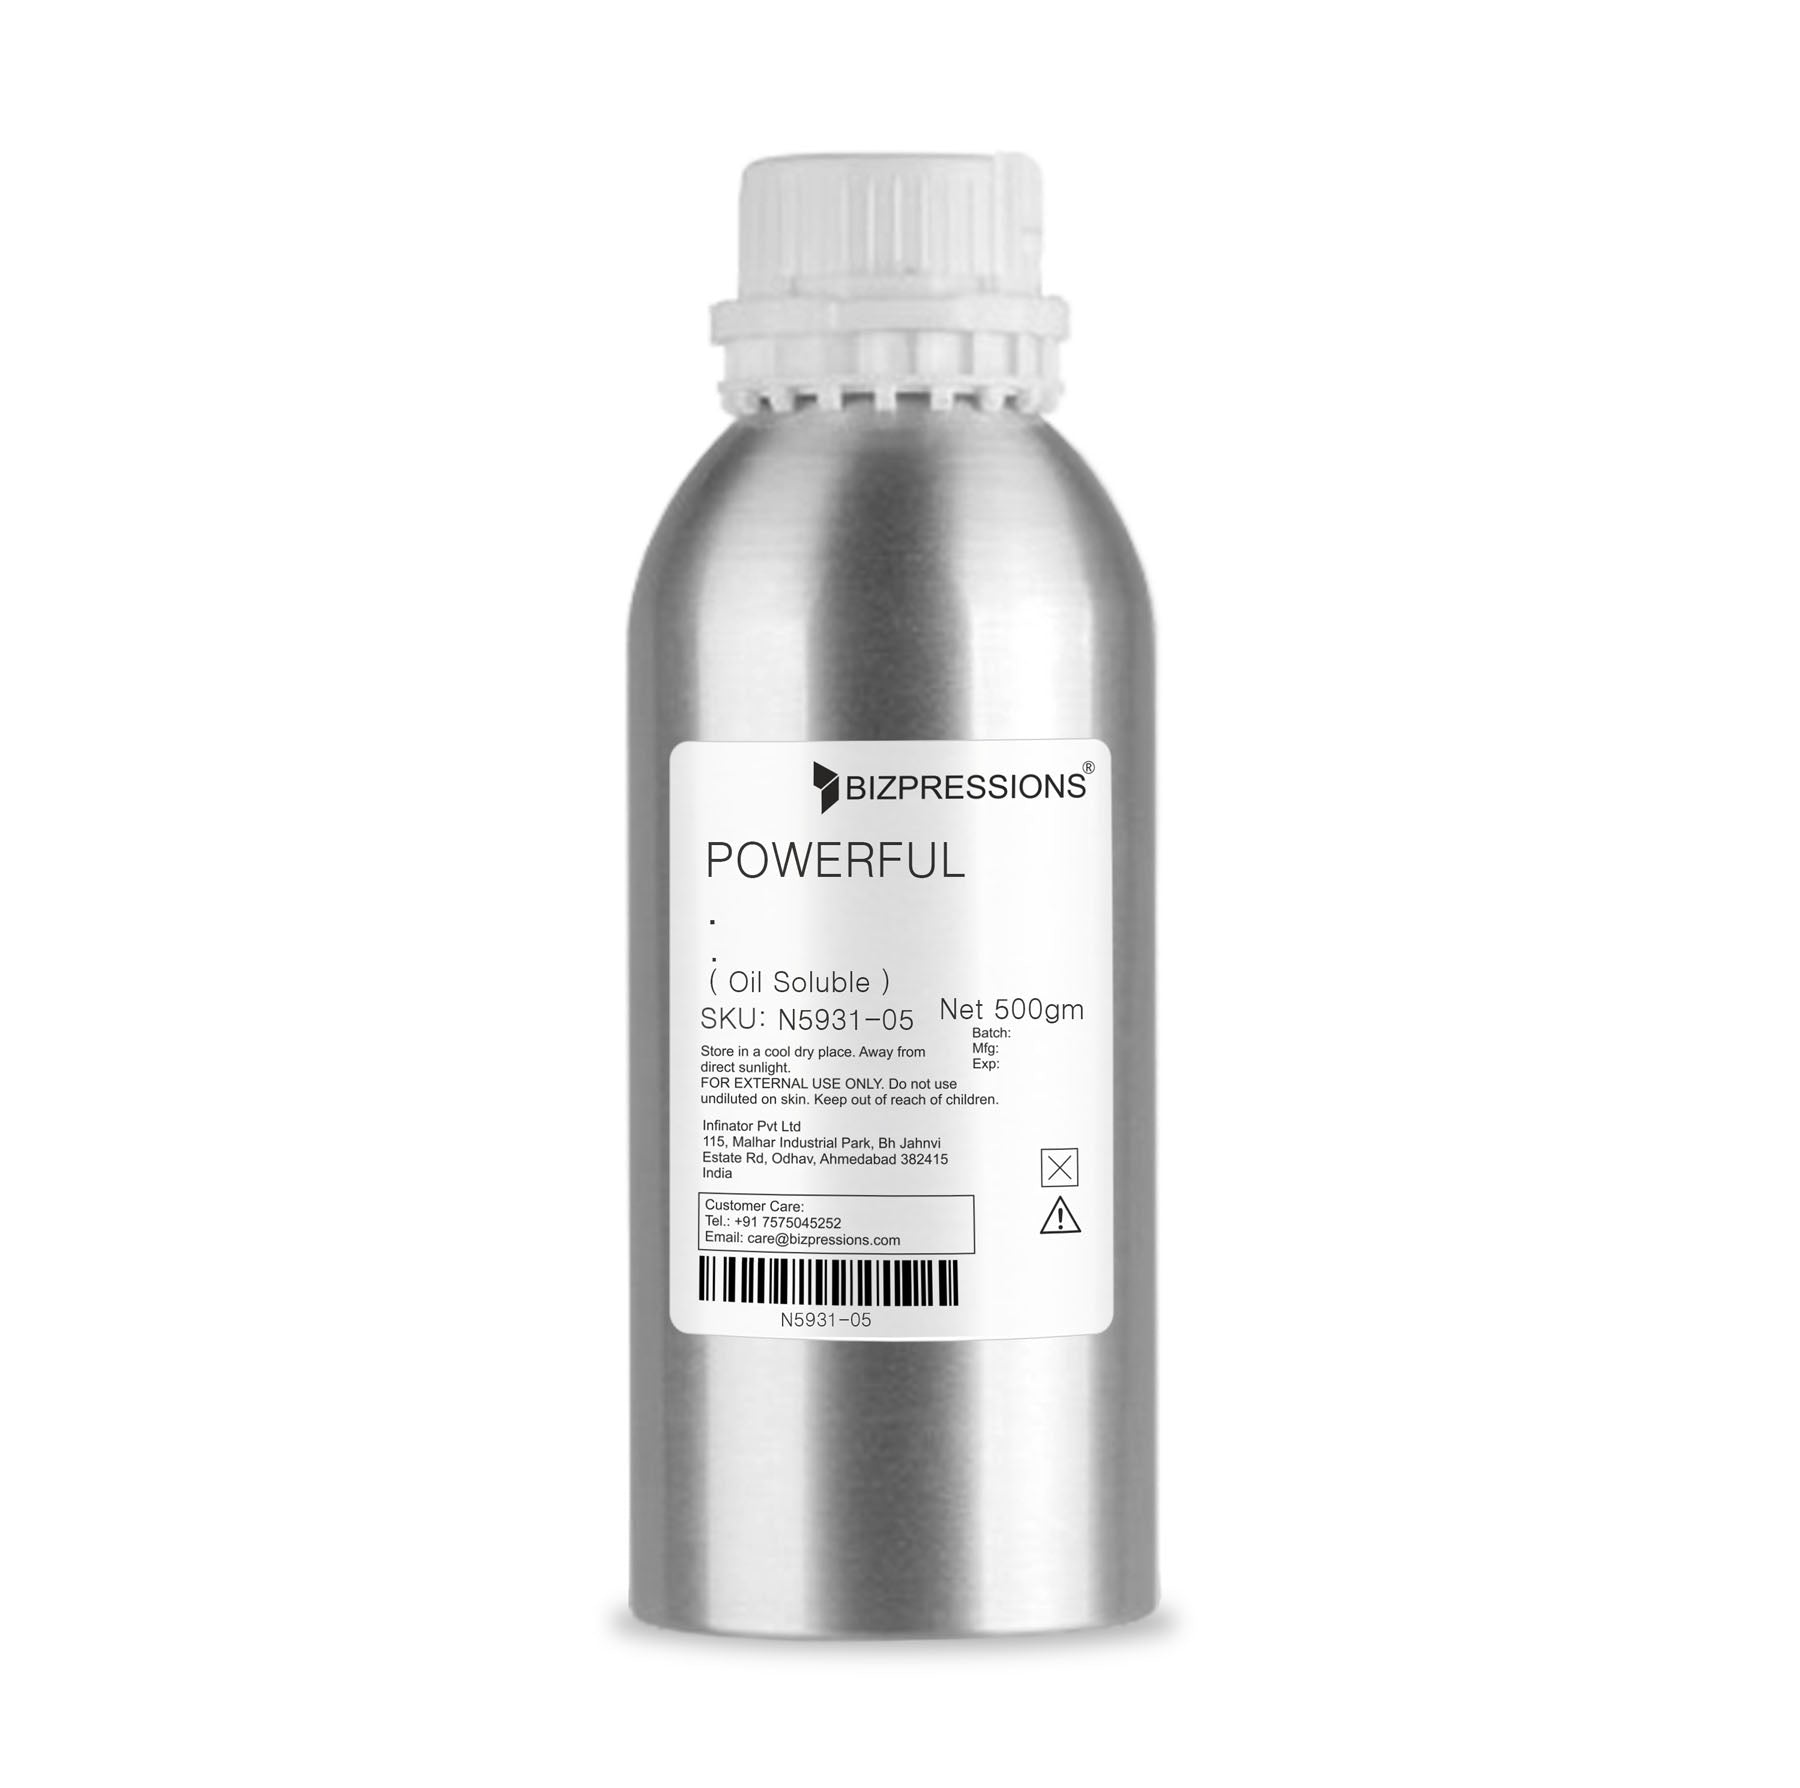 POWERFUL - Fragrance ( Oil Soluble ) - 500 gm